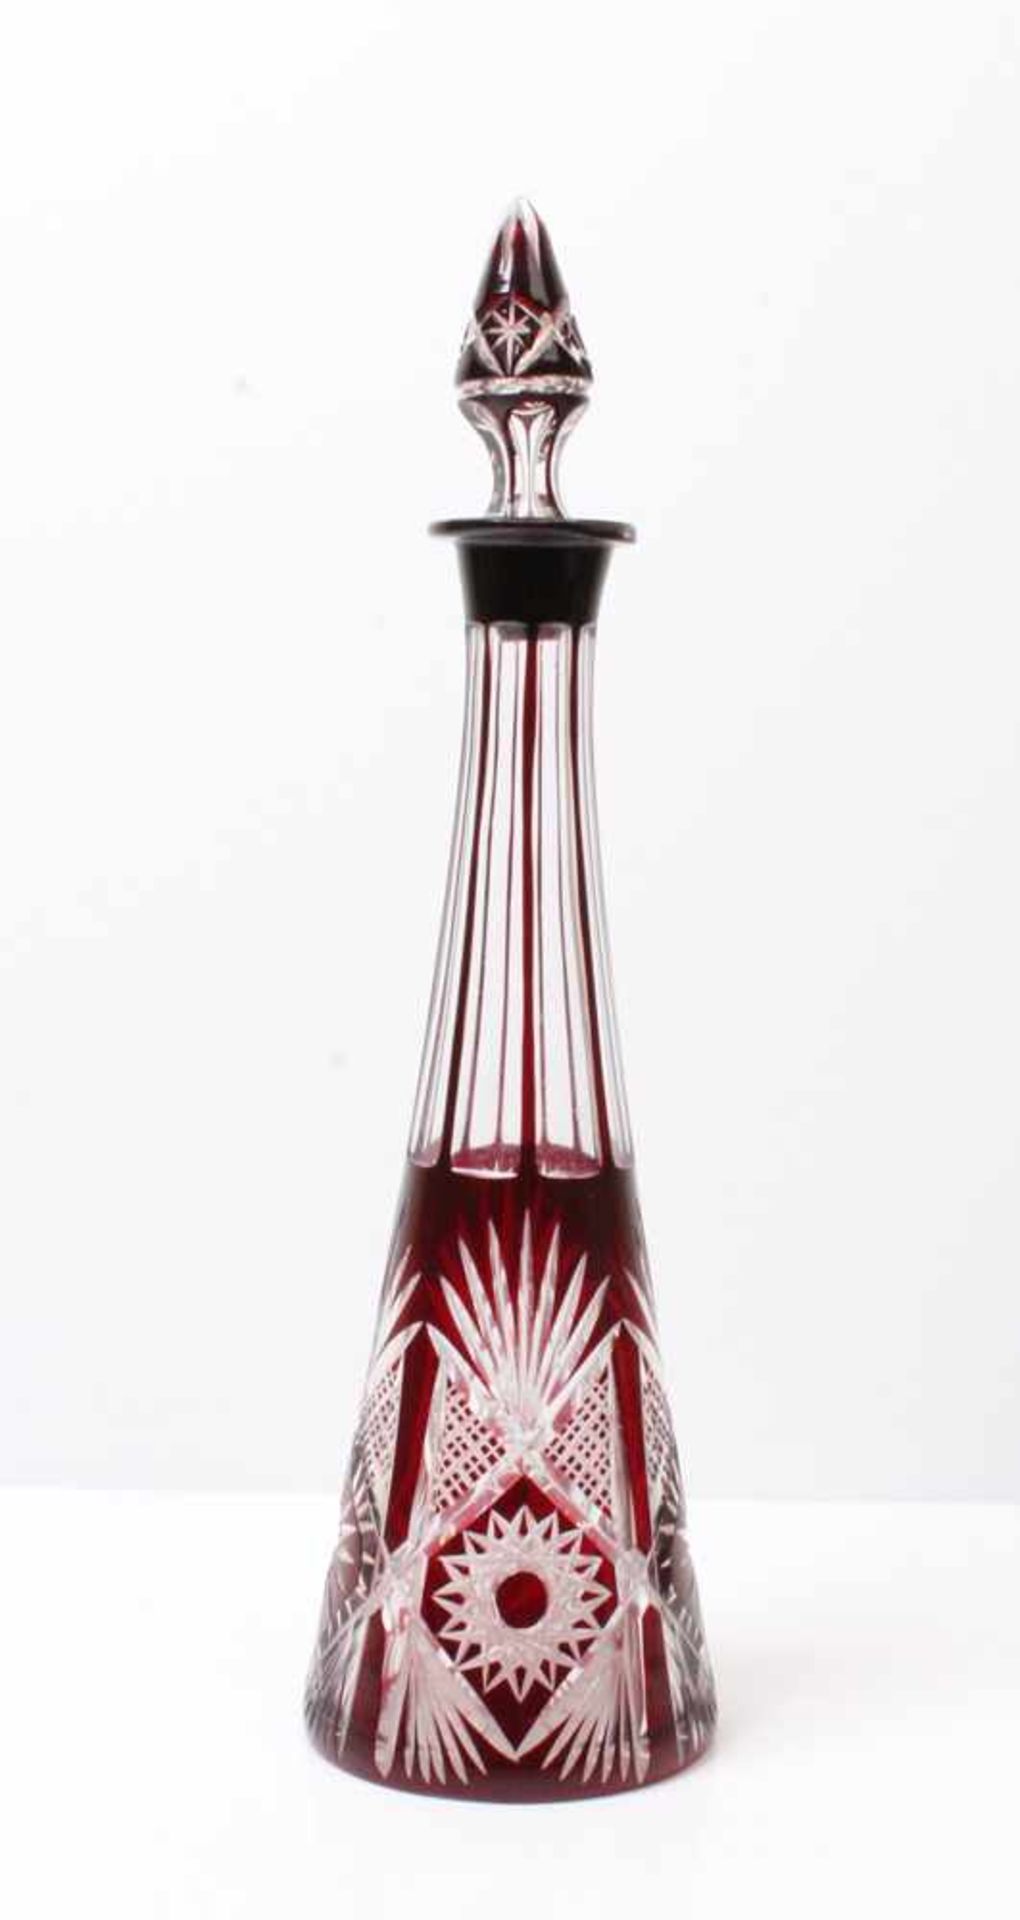 Karaffe.Böhmen, Ende 19. Jh. Farbloses Glas mit rotem Überfang. H: 35 cm.